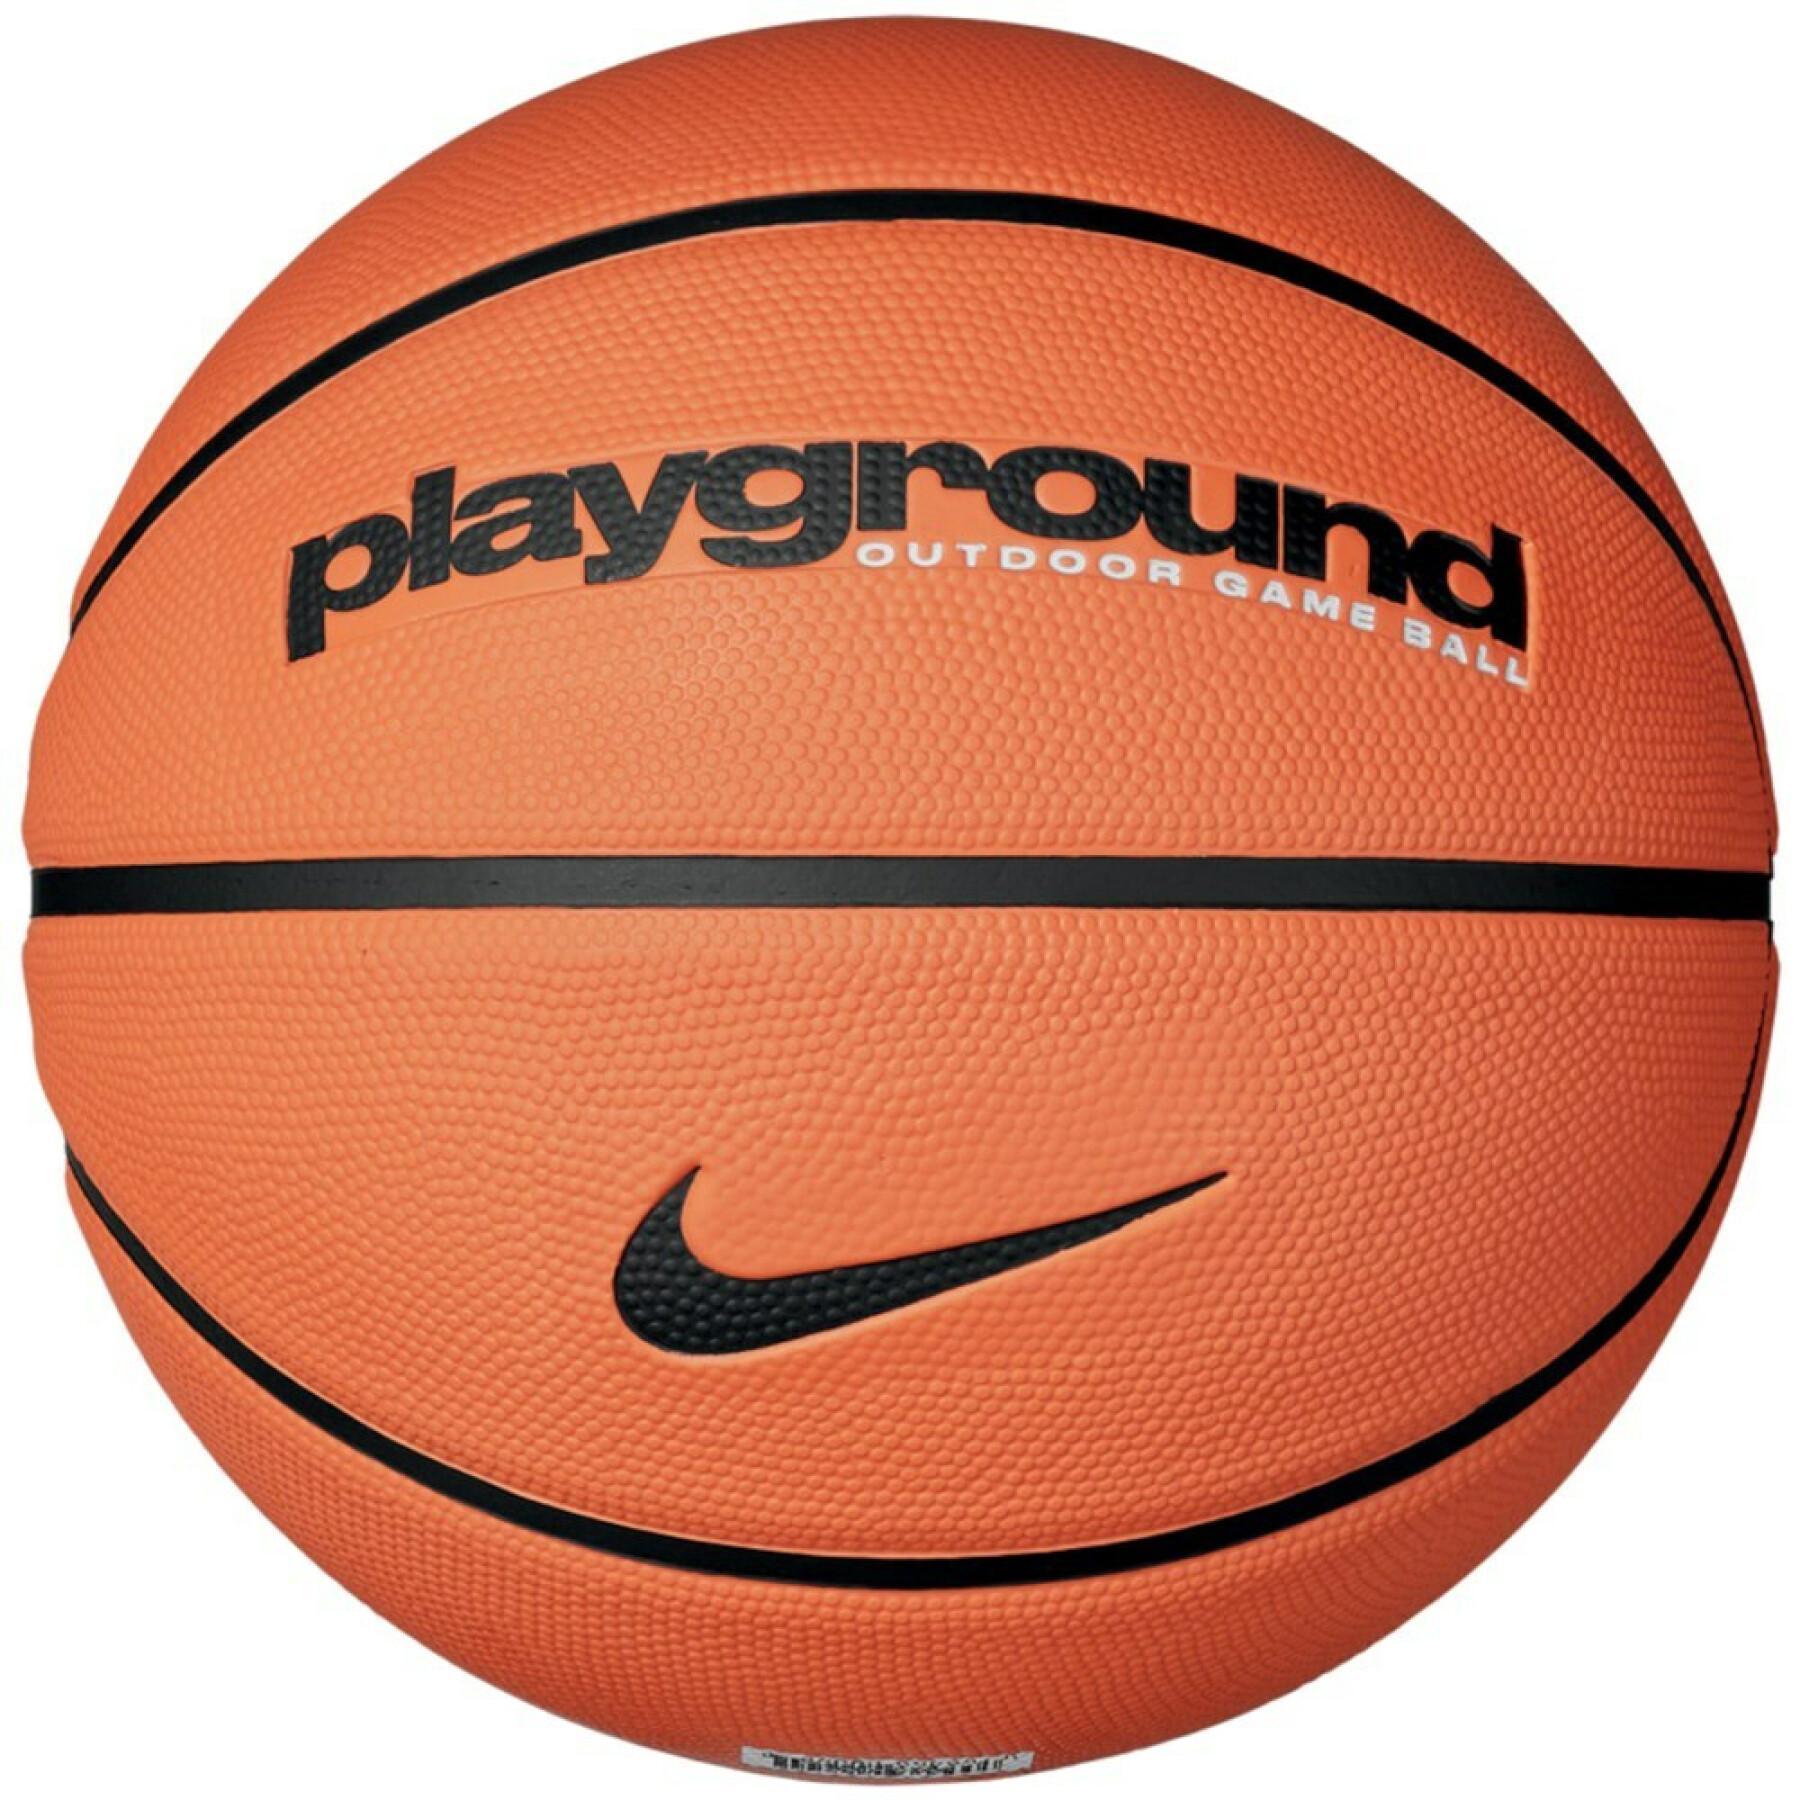 Basketball Nike Everyday Playground 8P Graphic Deflated